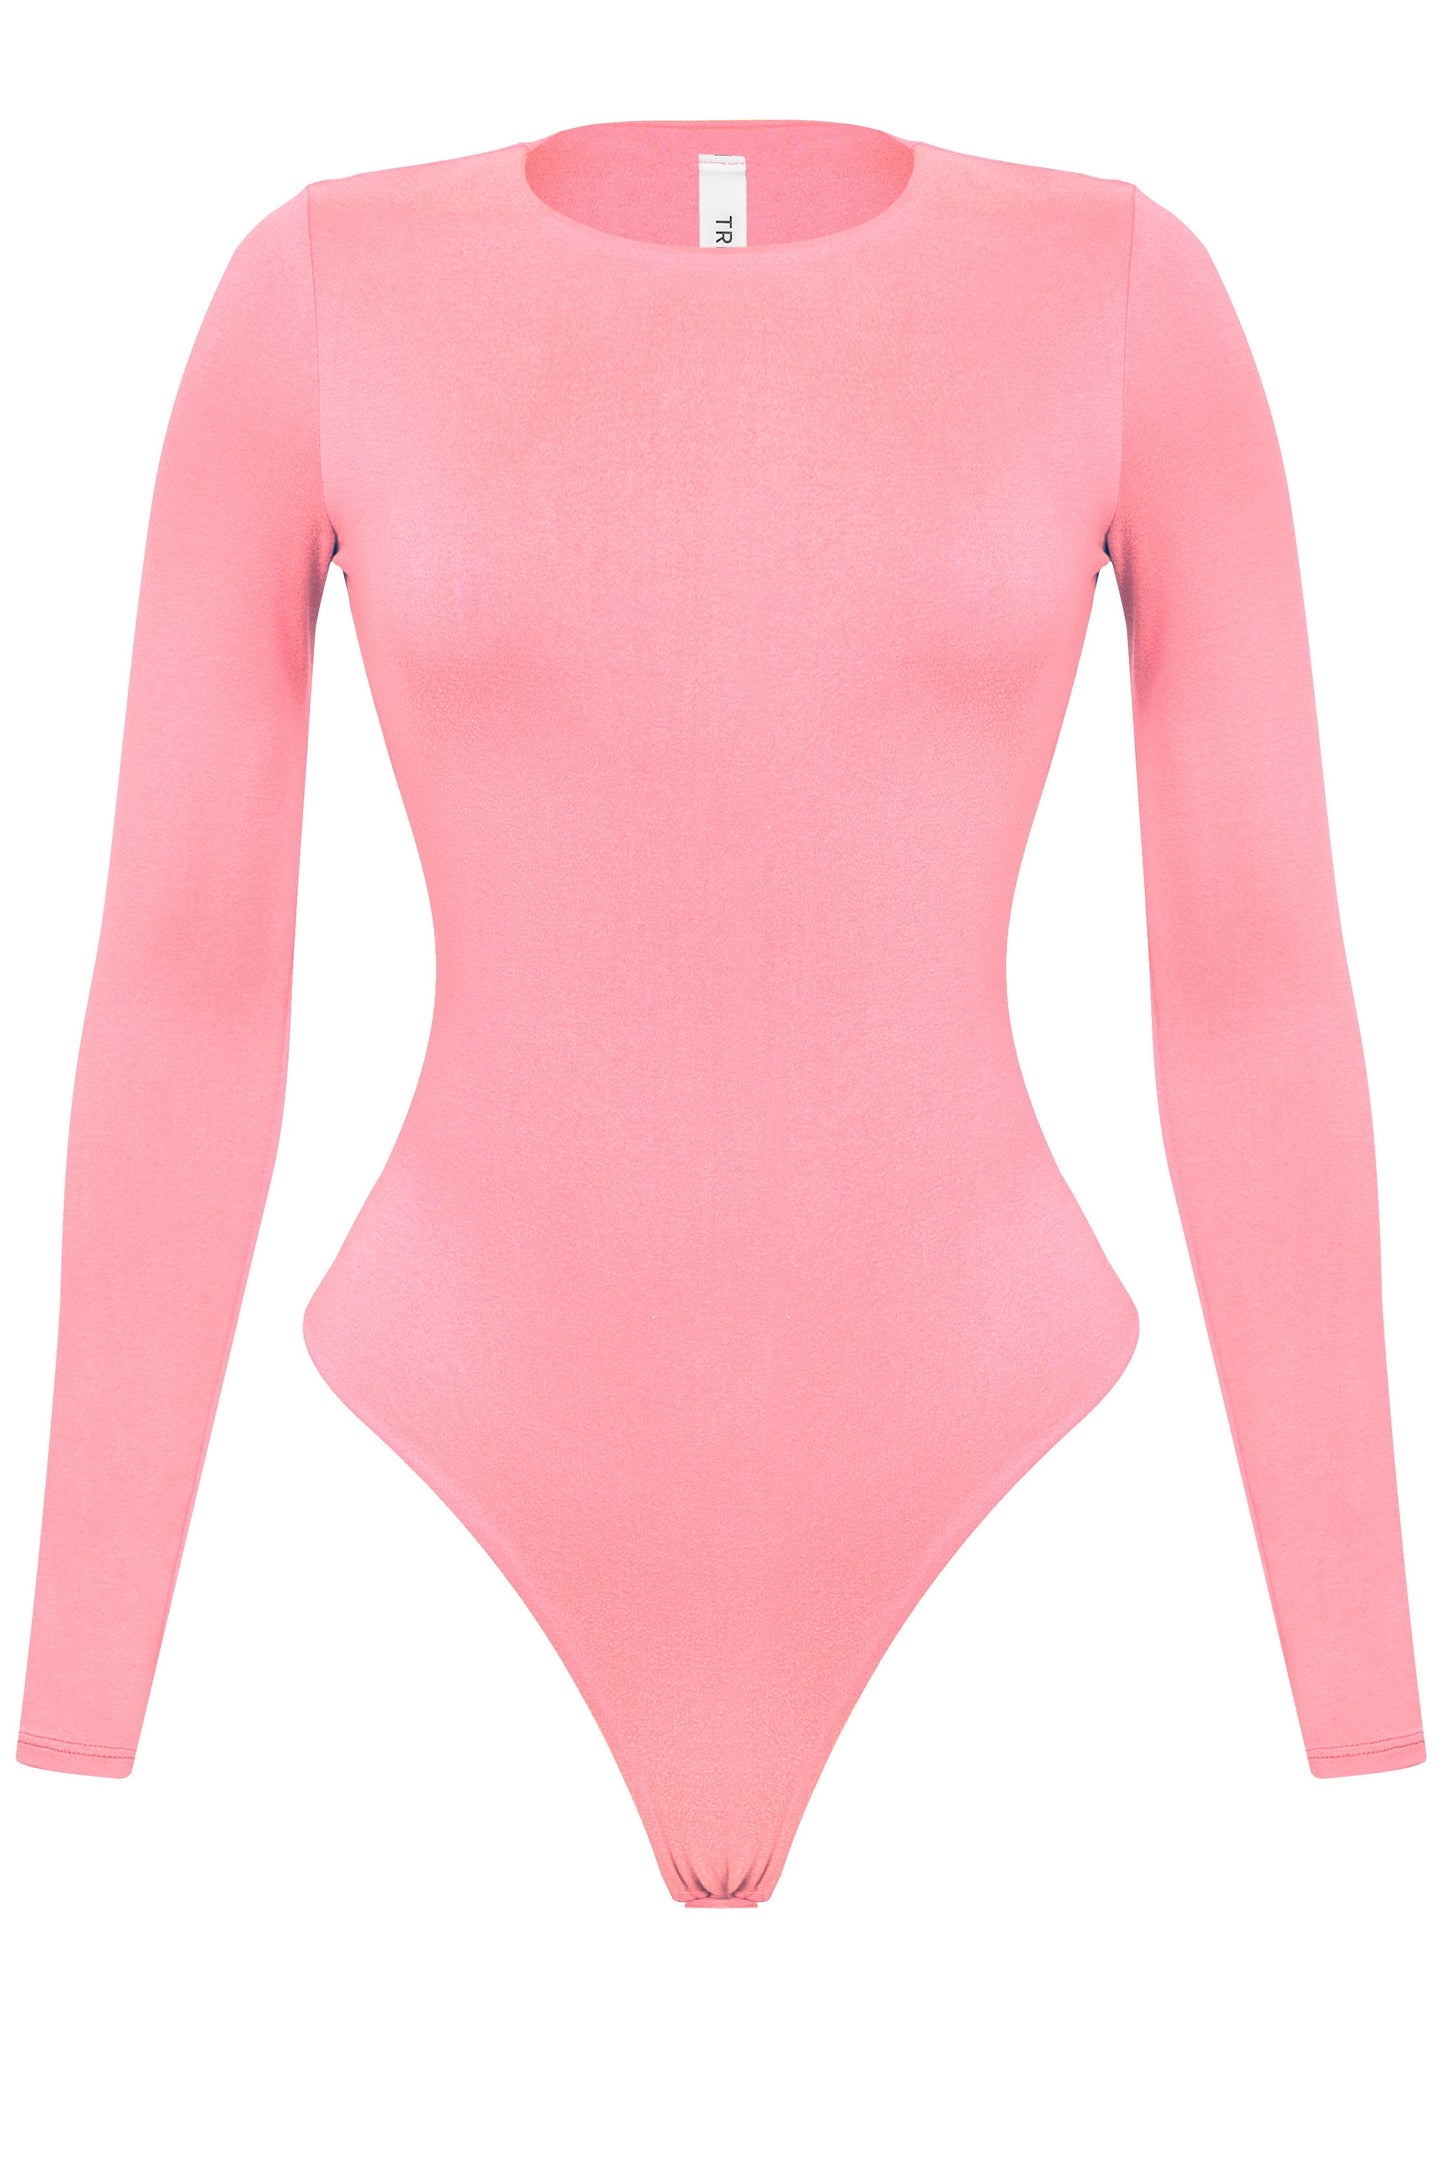 Heidi Scoopneck Bodysuit (Pink)